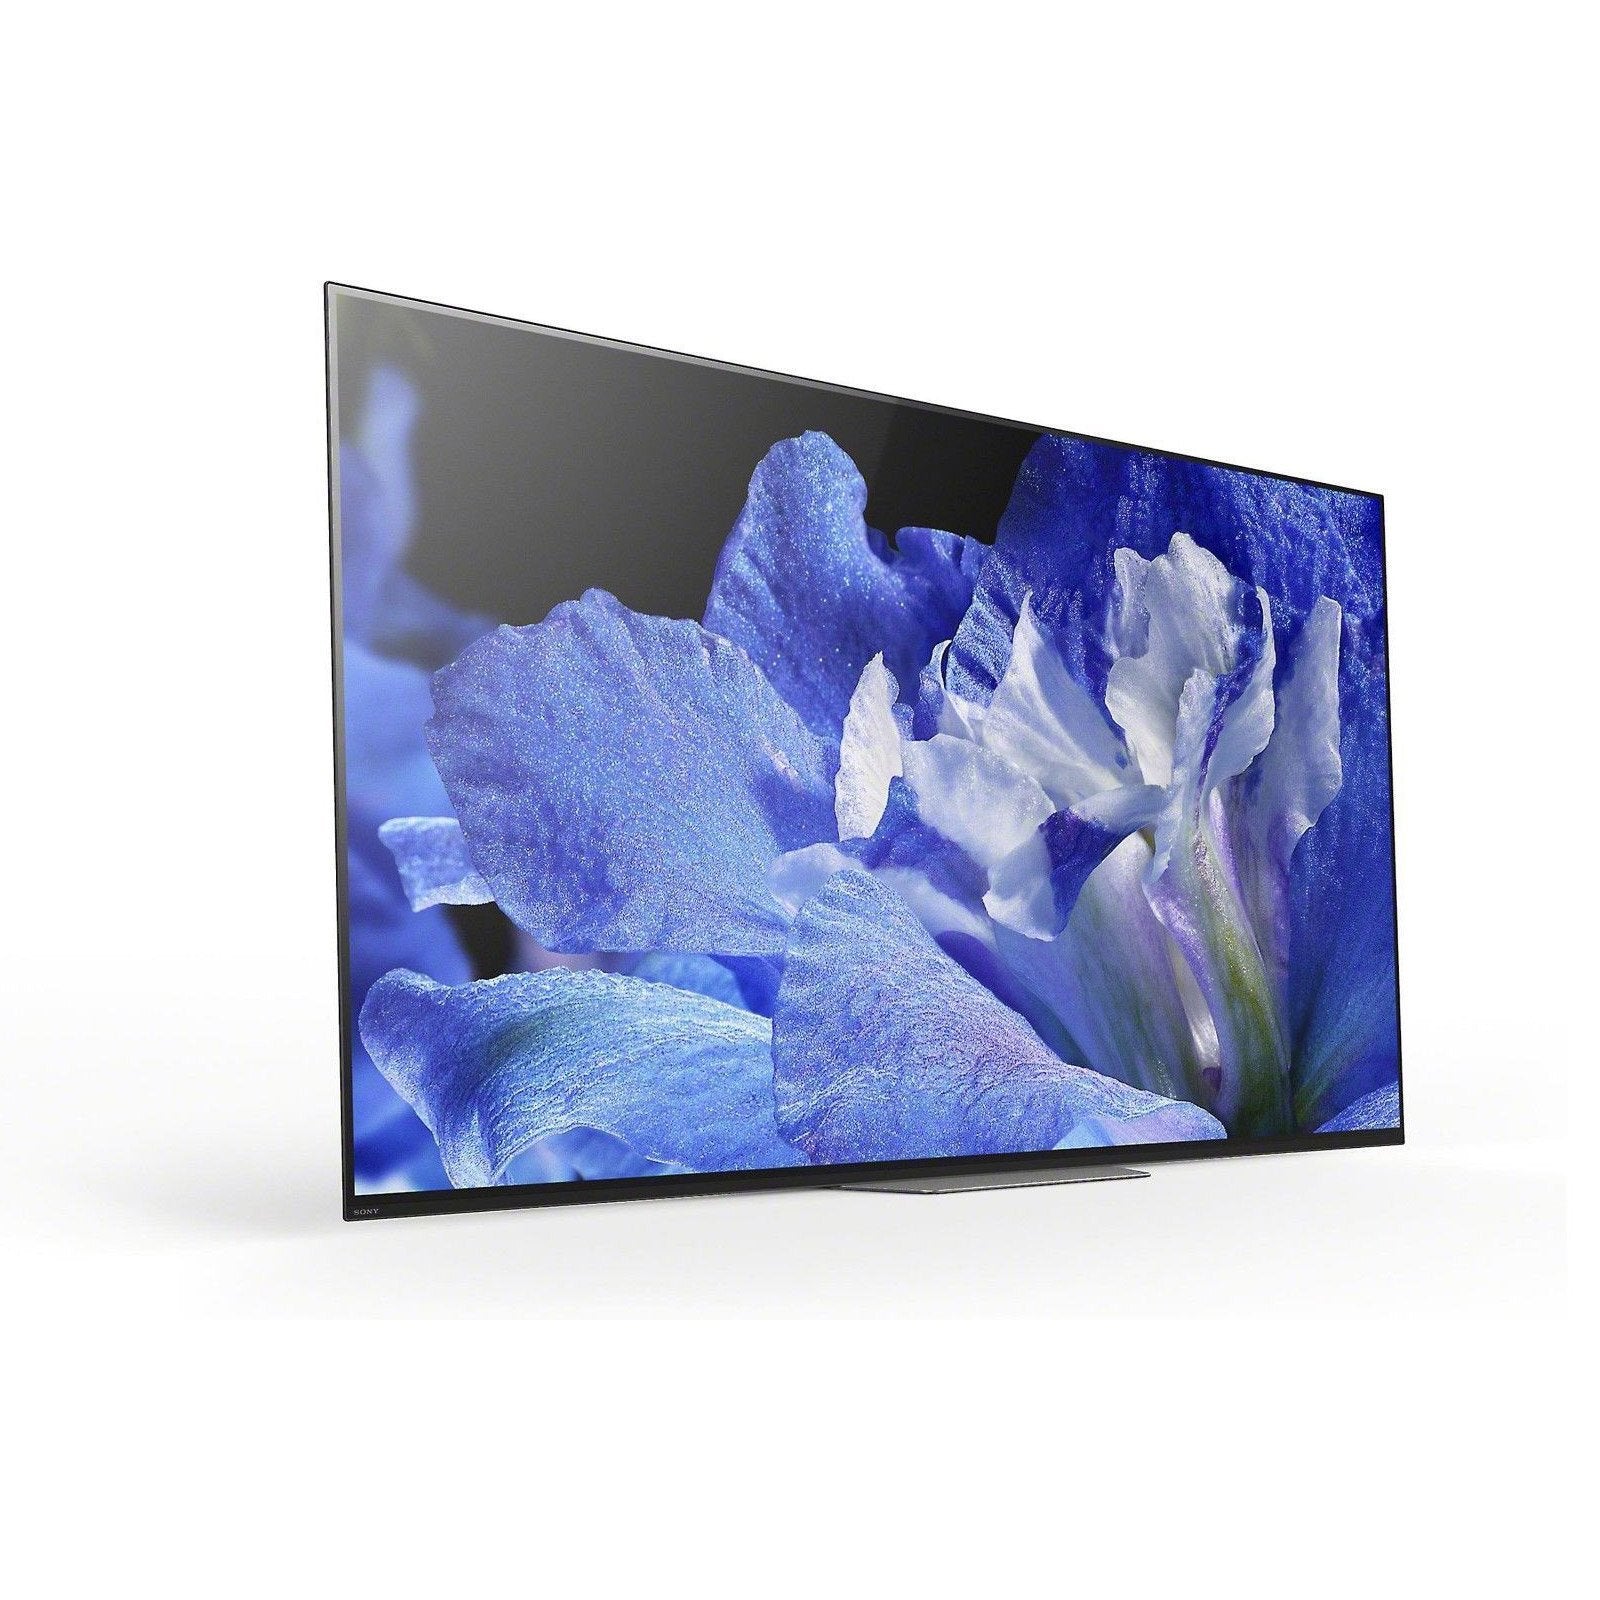 Sony XBR-65A8F 65-Inch 4K Ultra HD Smart BRAVIA OLED TV